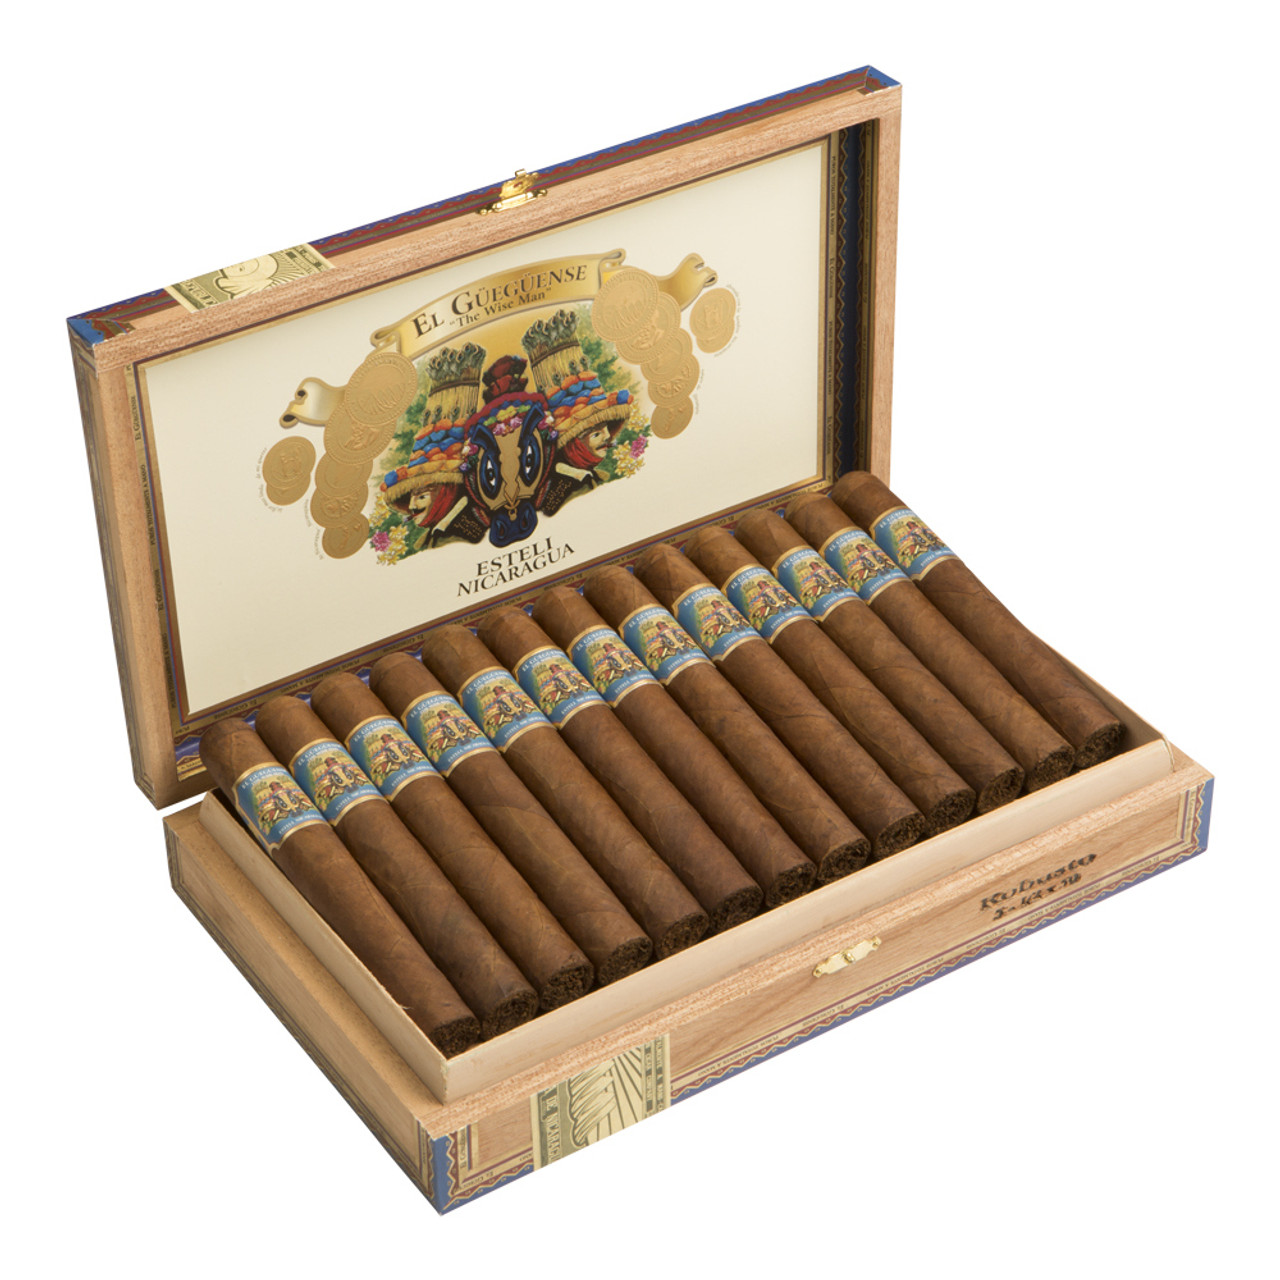 Foundation El Gueguense Robusto Cigars - 5.5 x 50 (Box of 25) *Box